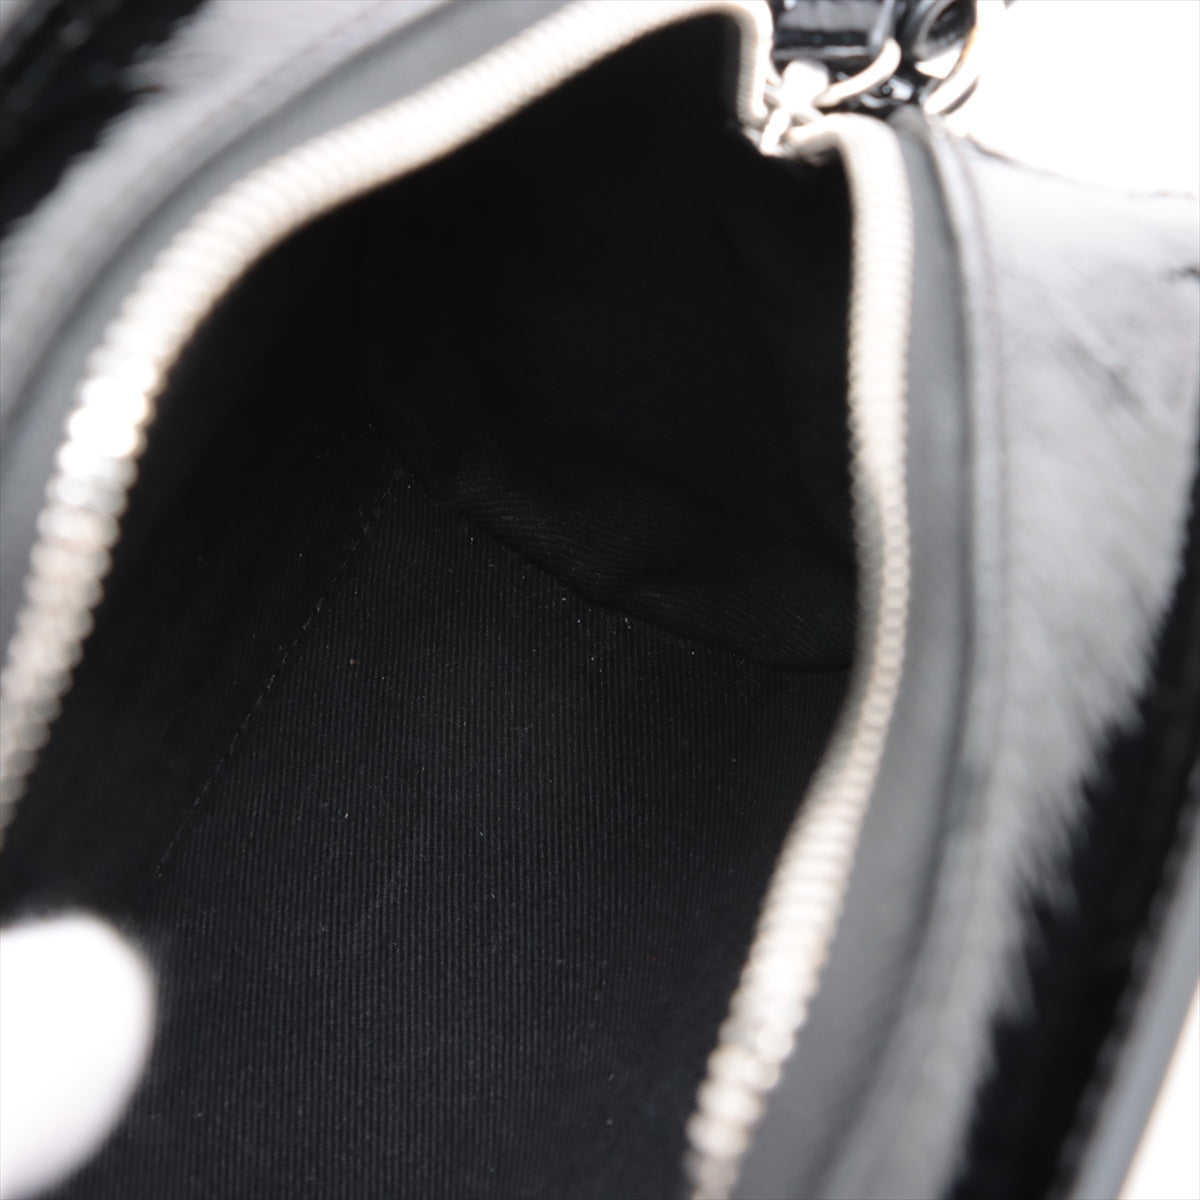 Arpace Patent Leather Shoulder Bag Black